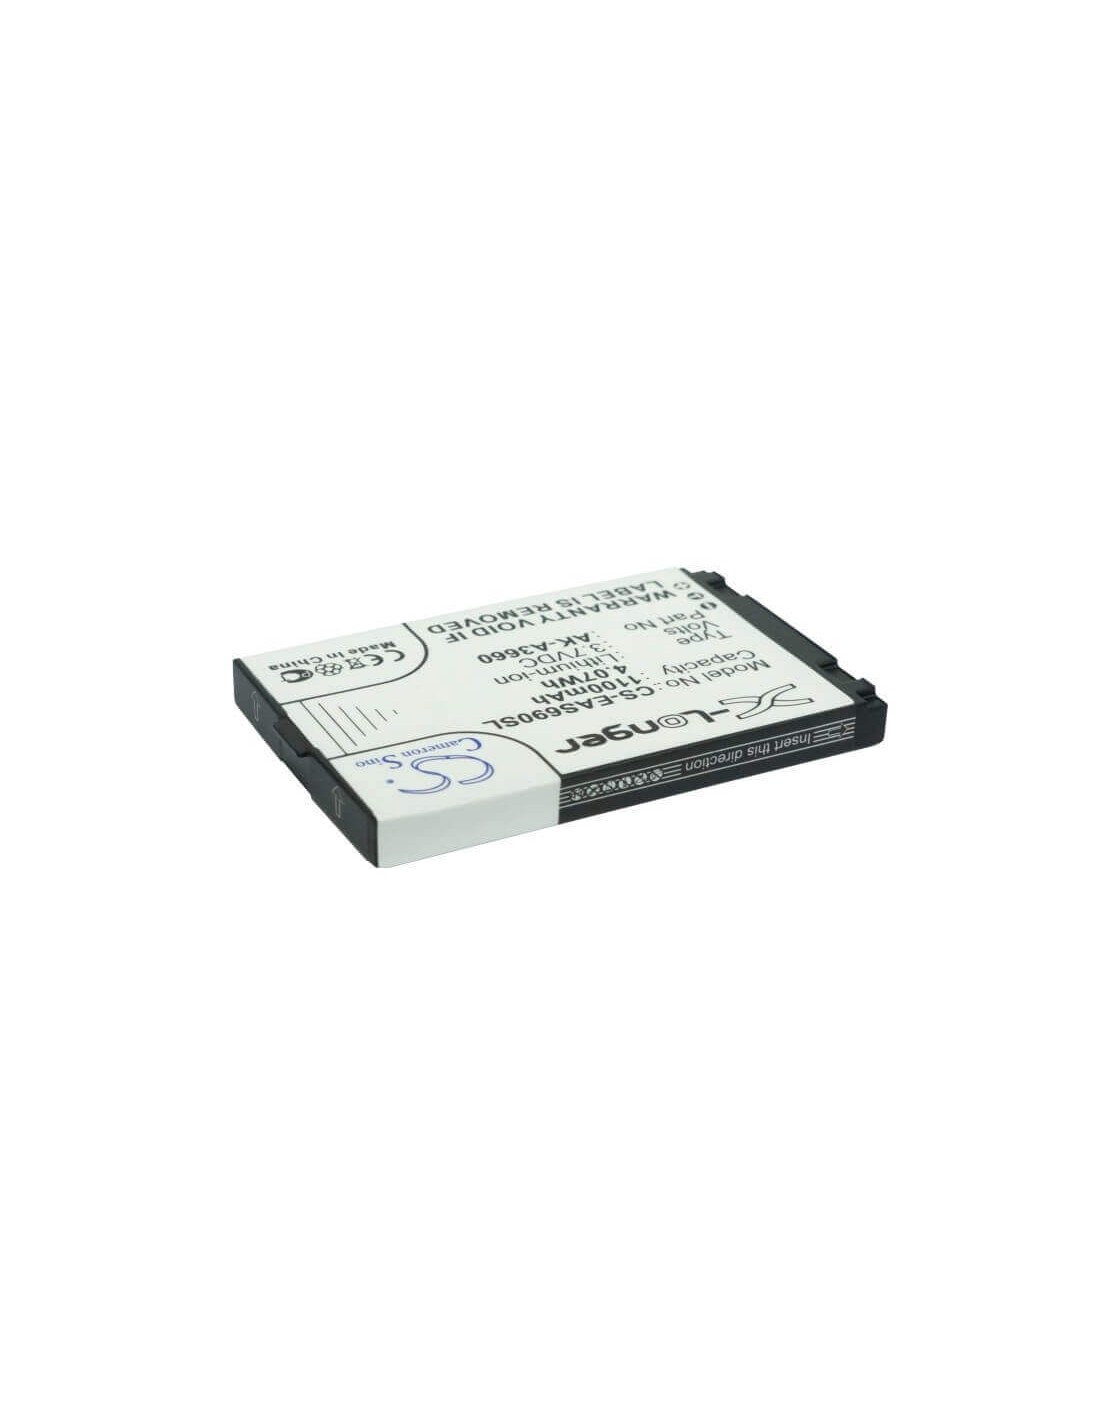 Battery for Emporia SafetyPlus, A3690 3.7V, 1100mAh - 4.07Wh